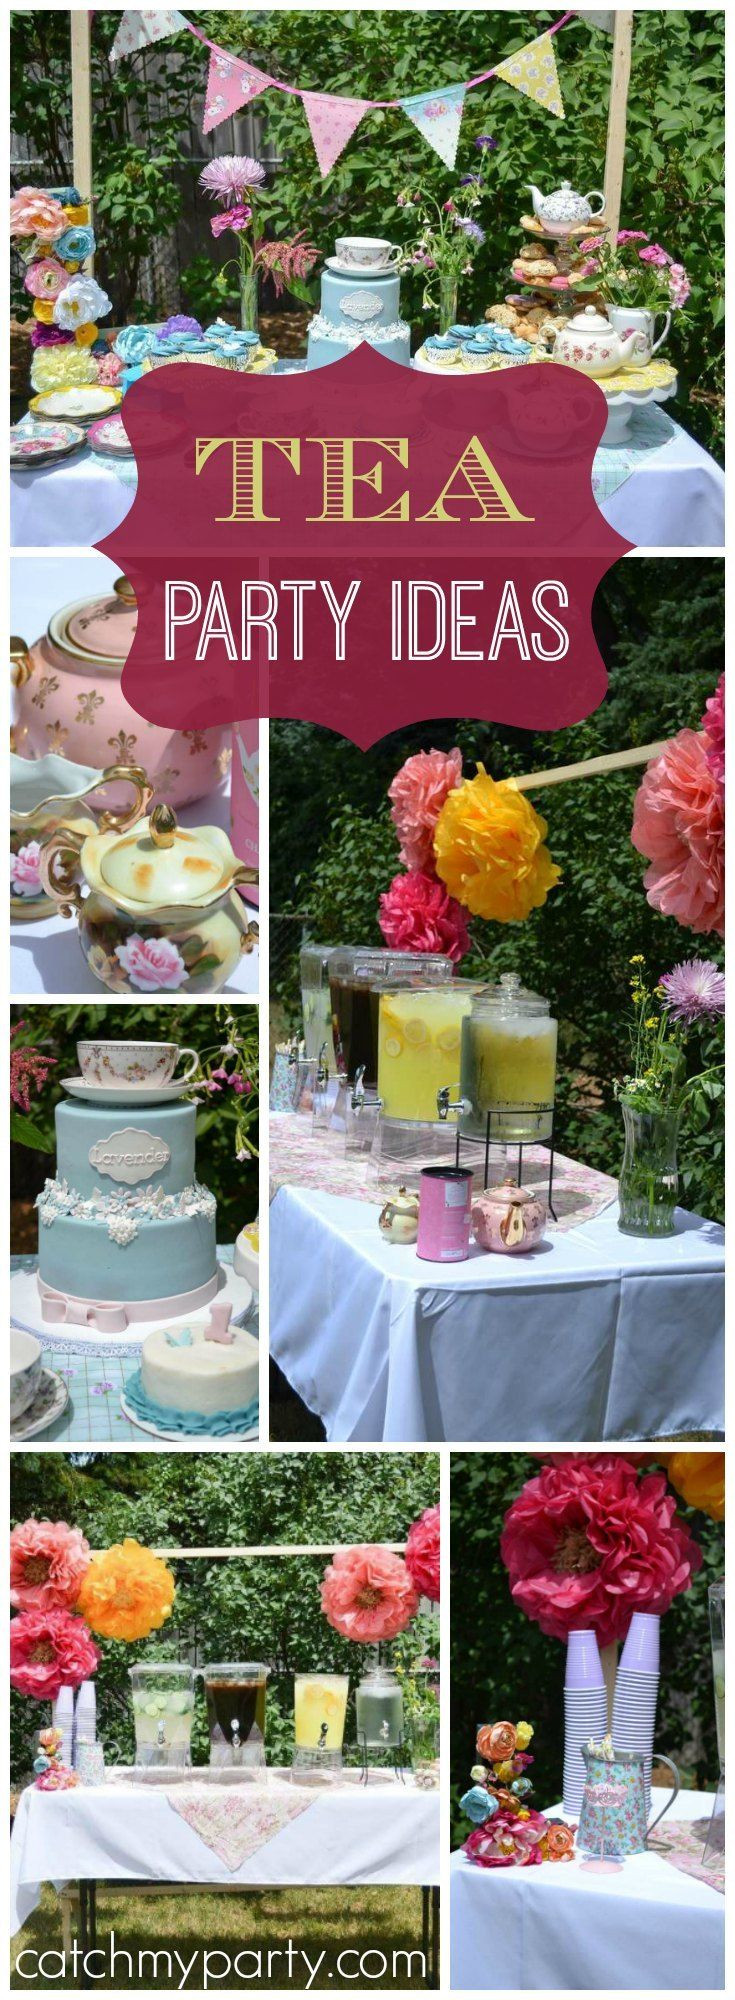 Fun Tea Party Ideas
 The 25 best High tea wedding ideas on Pinterest